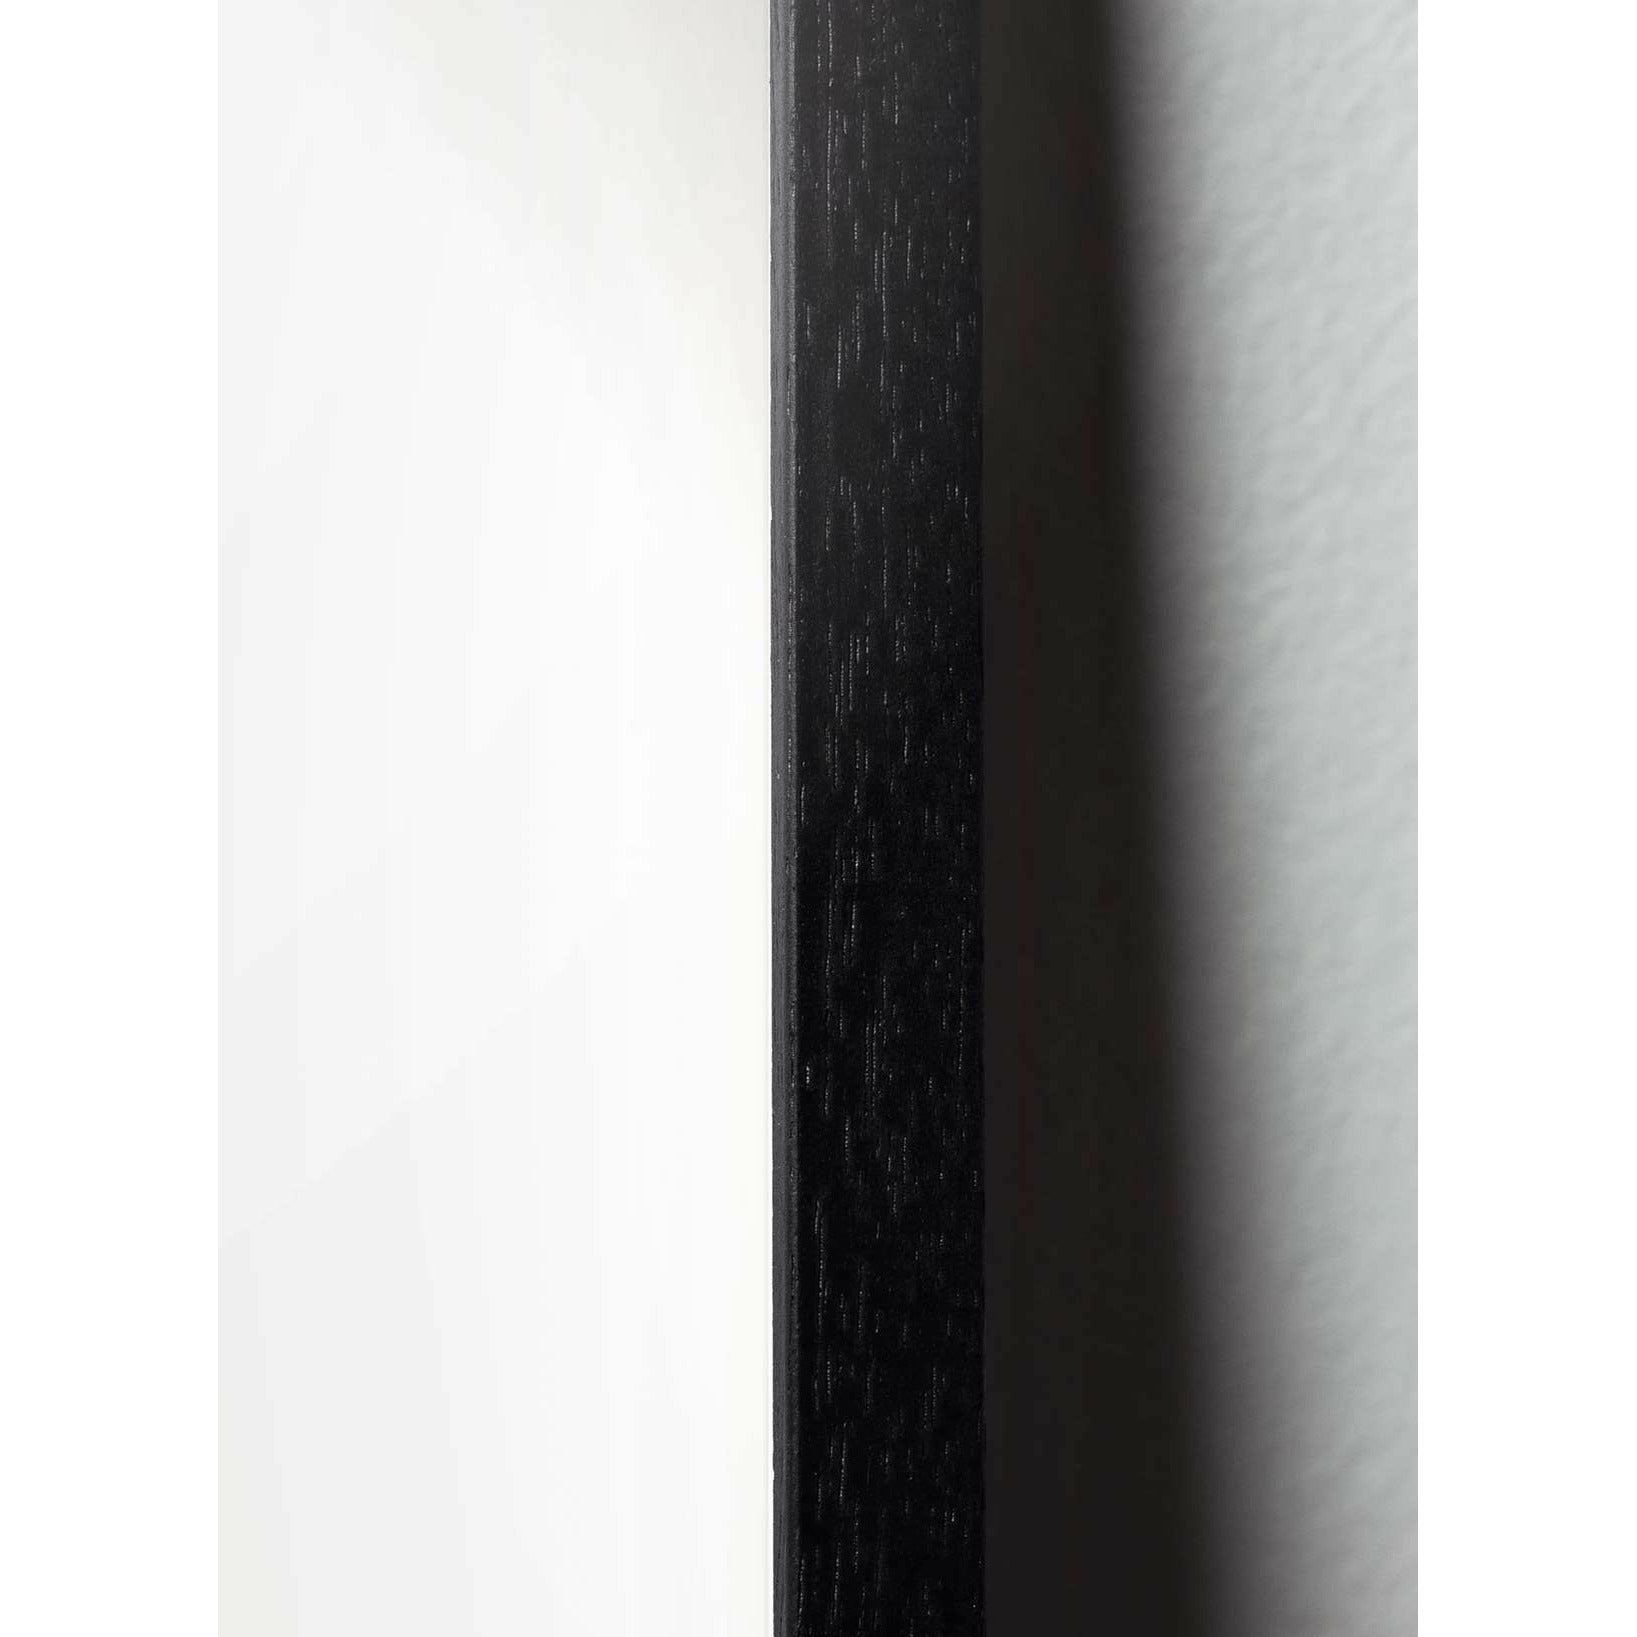 Póster clásico de Snowdrop de creación, marco en madera lacada negra de 30x40 cm, fondo verde